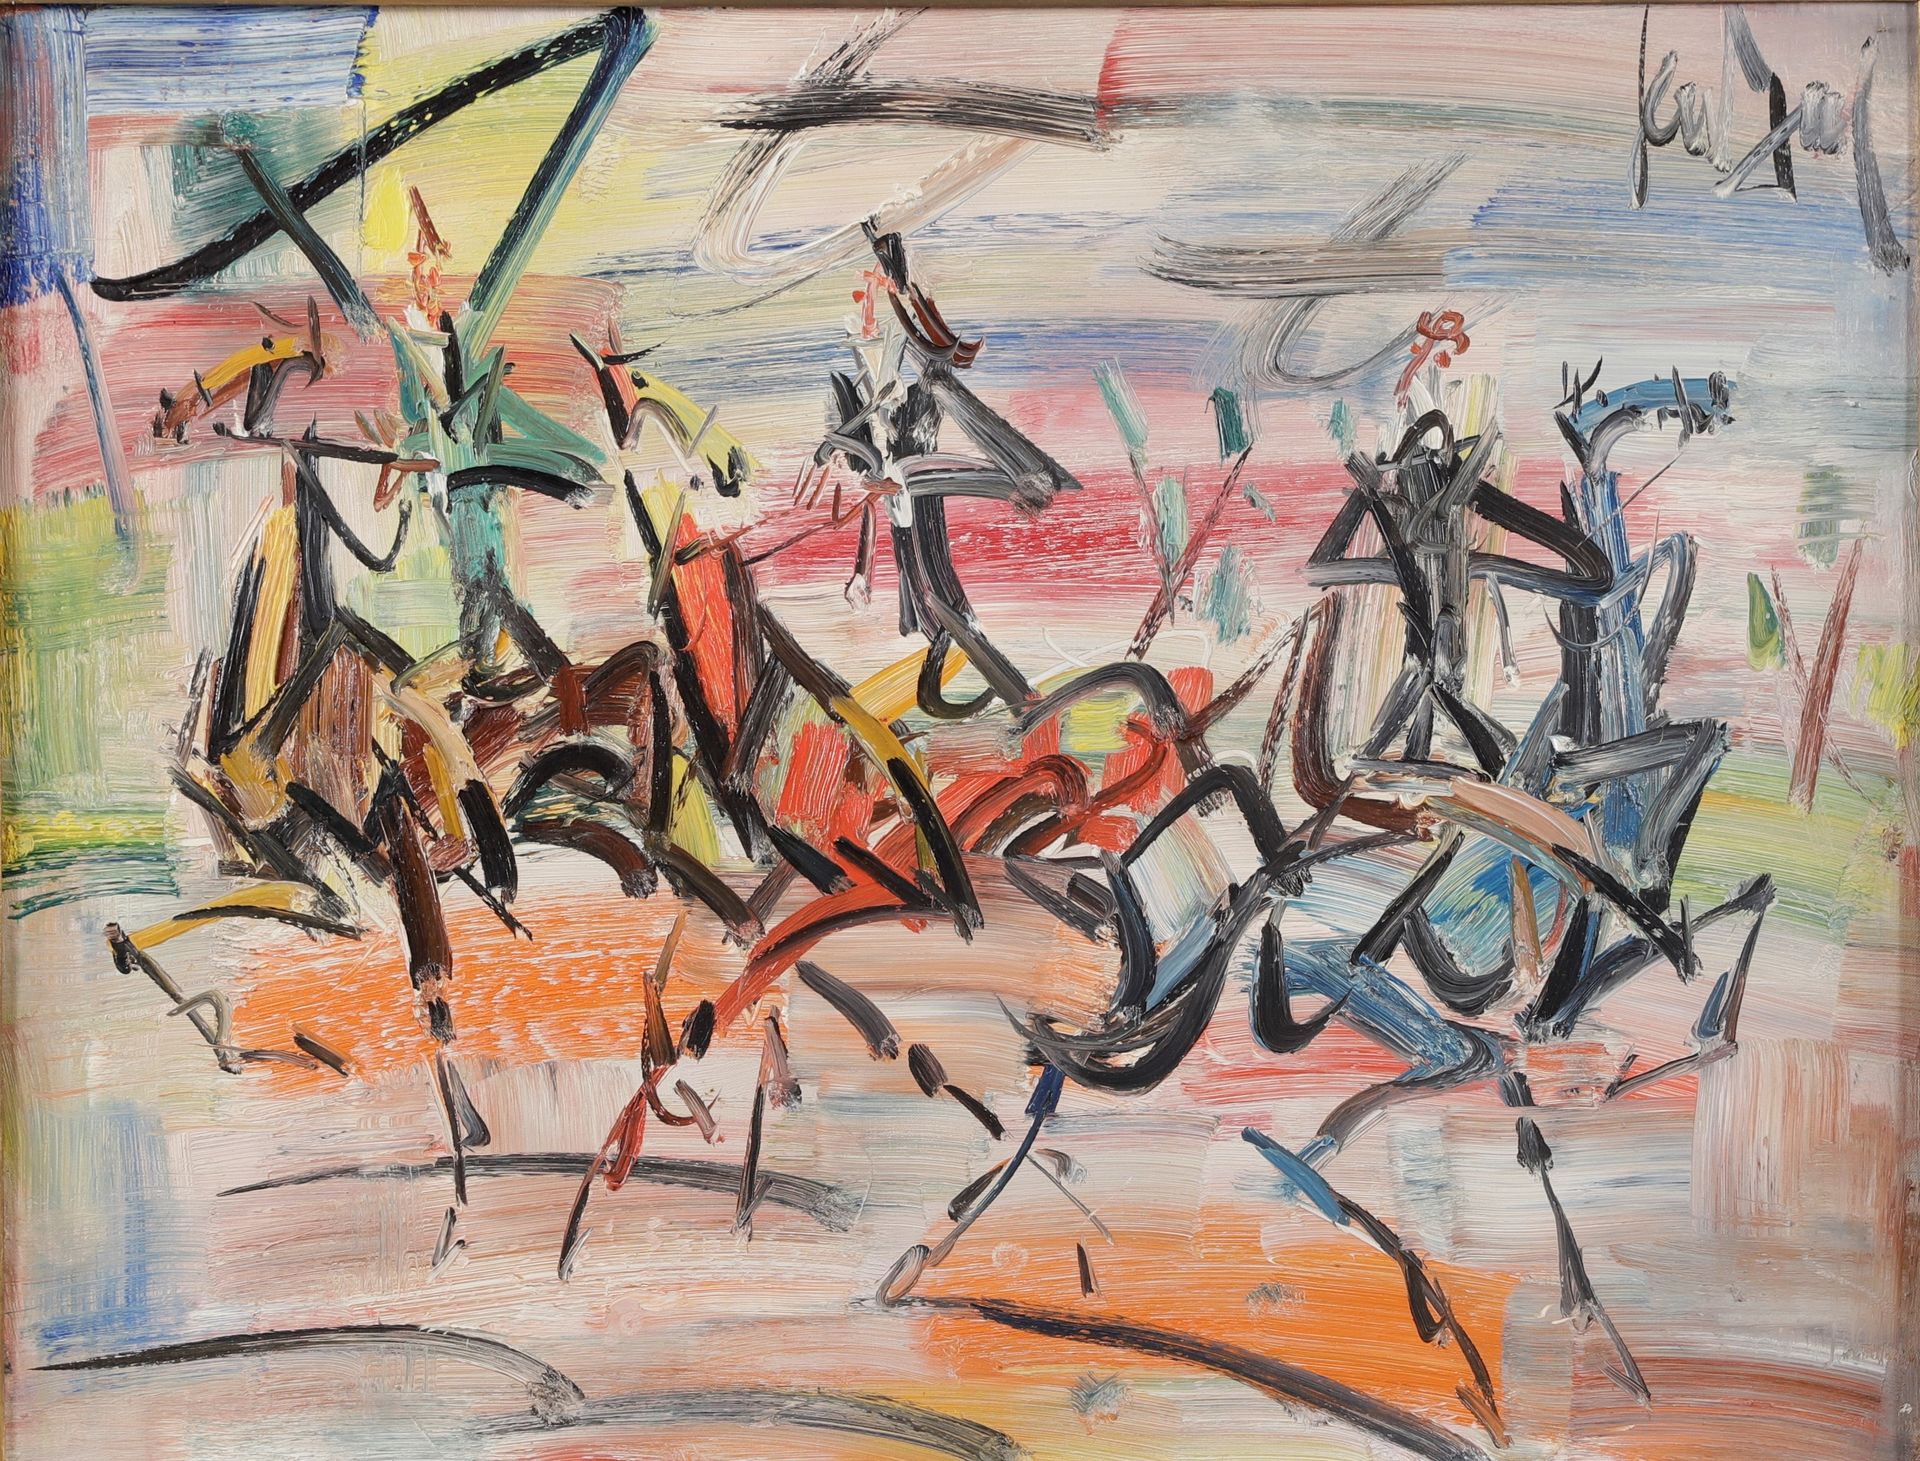 Null 玄宝（1895-1975）

赛马，约1960年

布面油画，右上角有签名

50 x 65厘米

专家：Tellier专家，巴黎 / Marc-He&hellip;